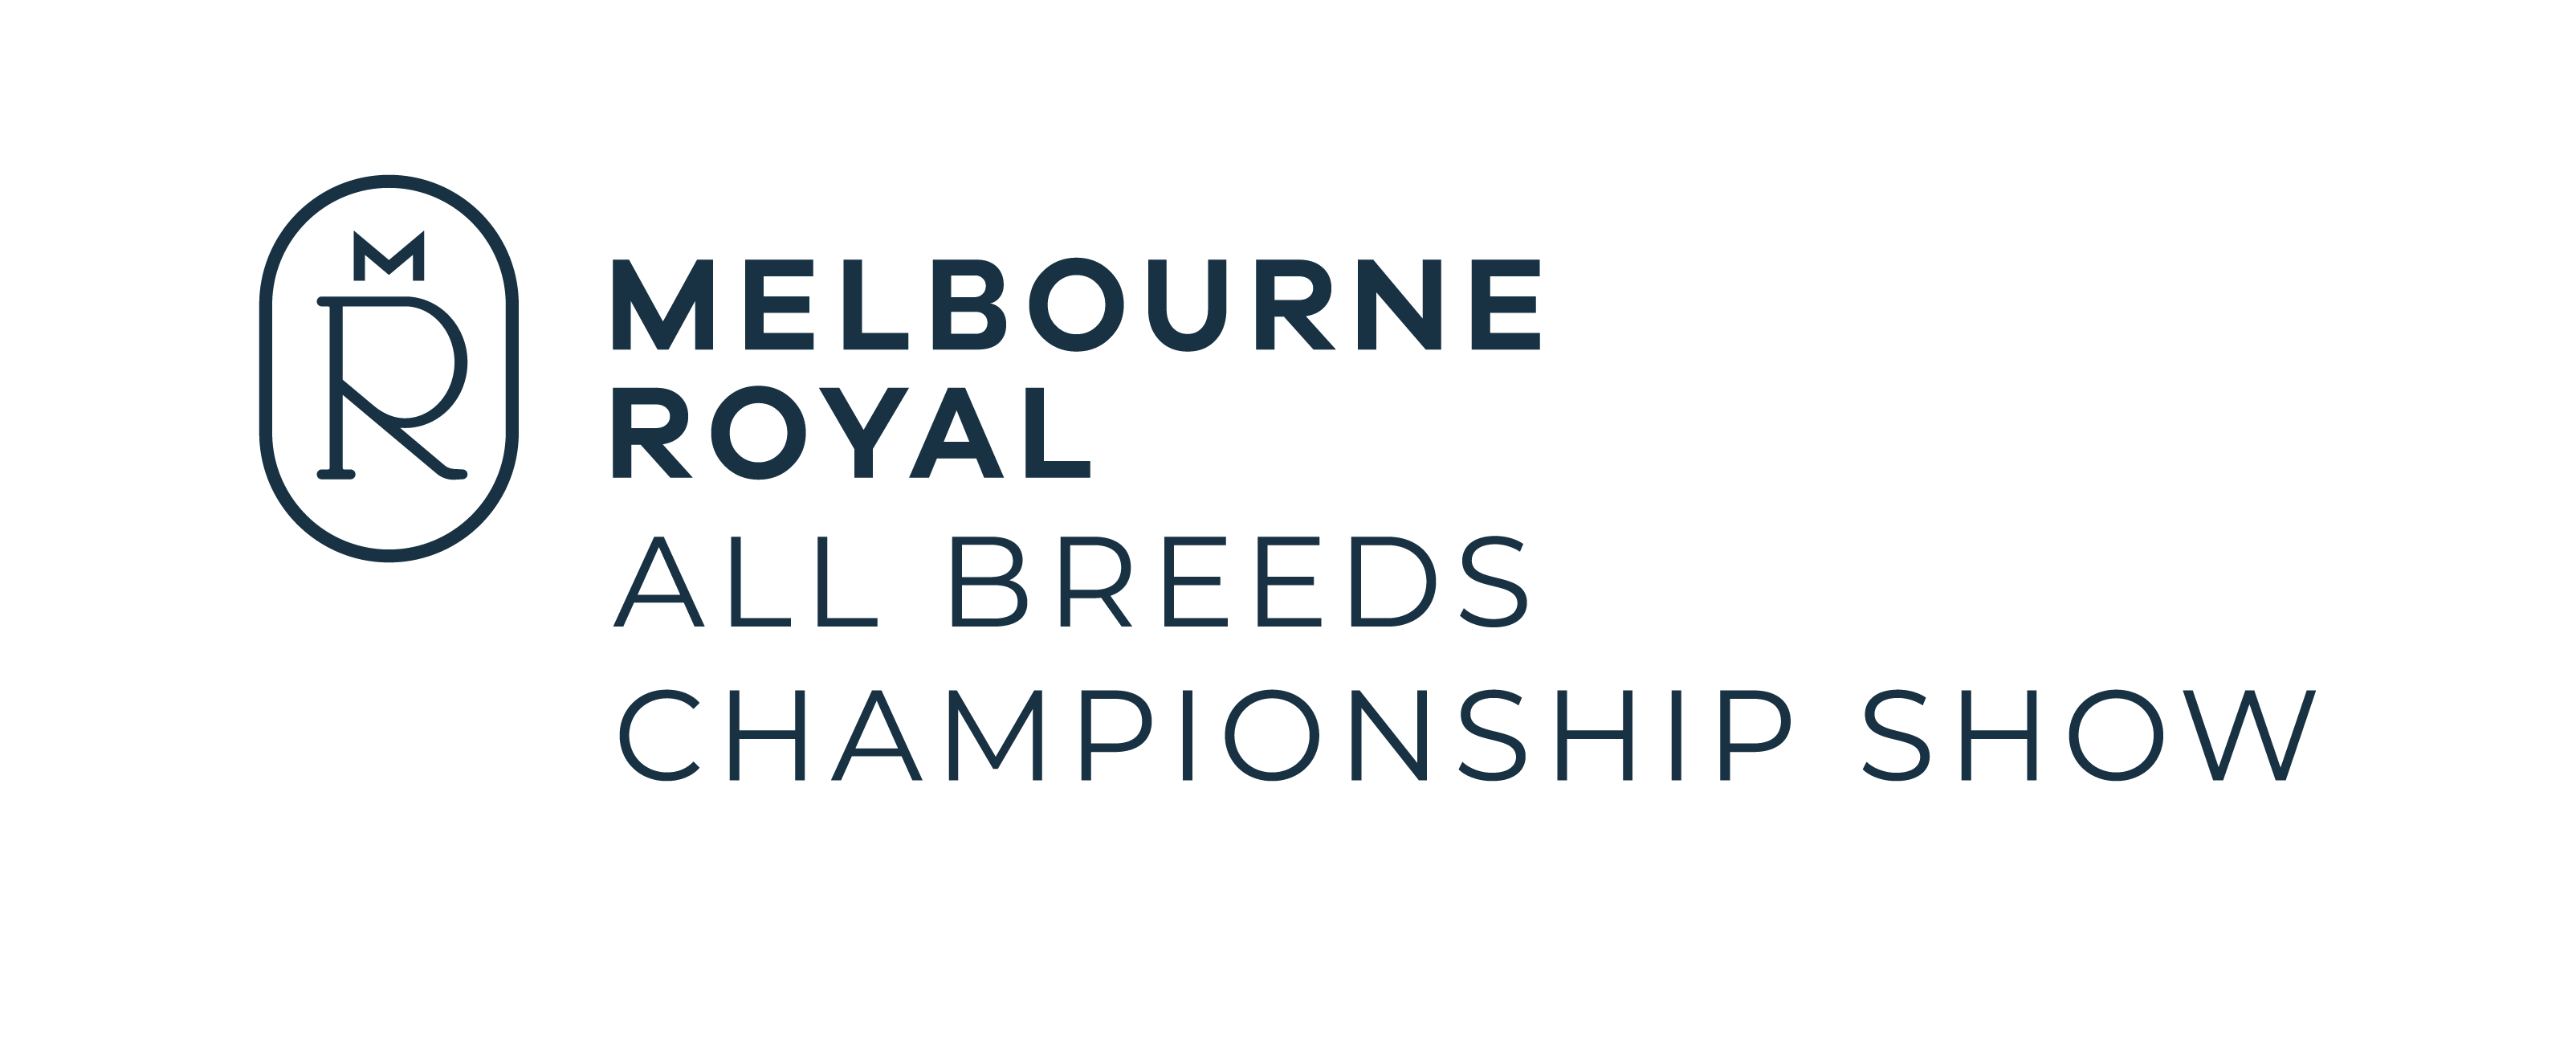 Melbourne Royal All Breeds Championship Dog Show